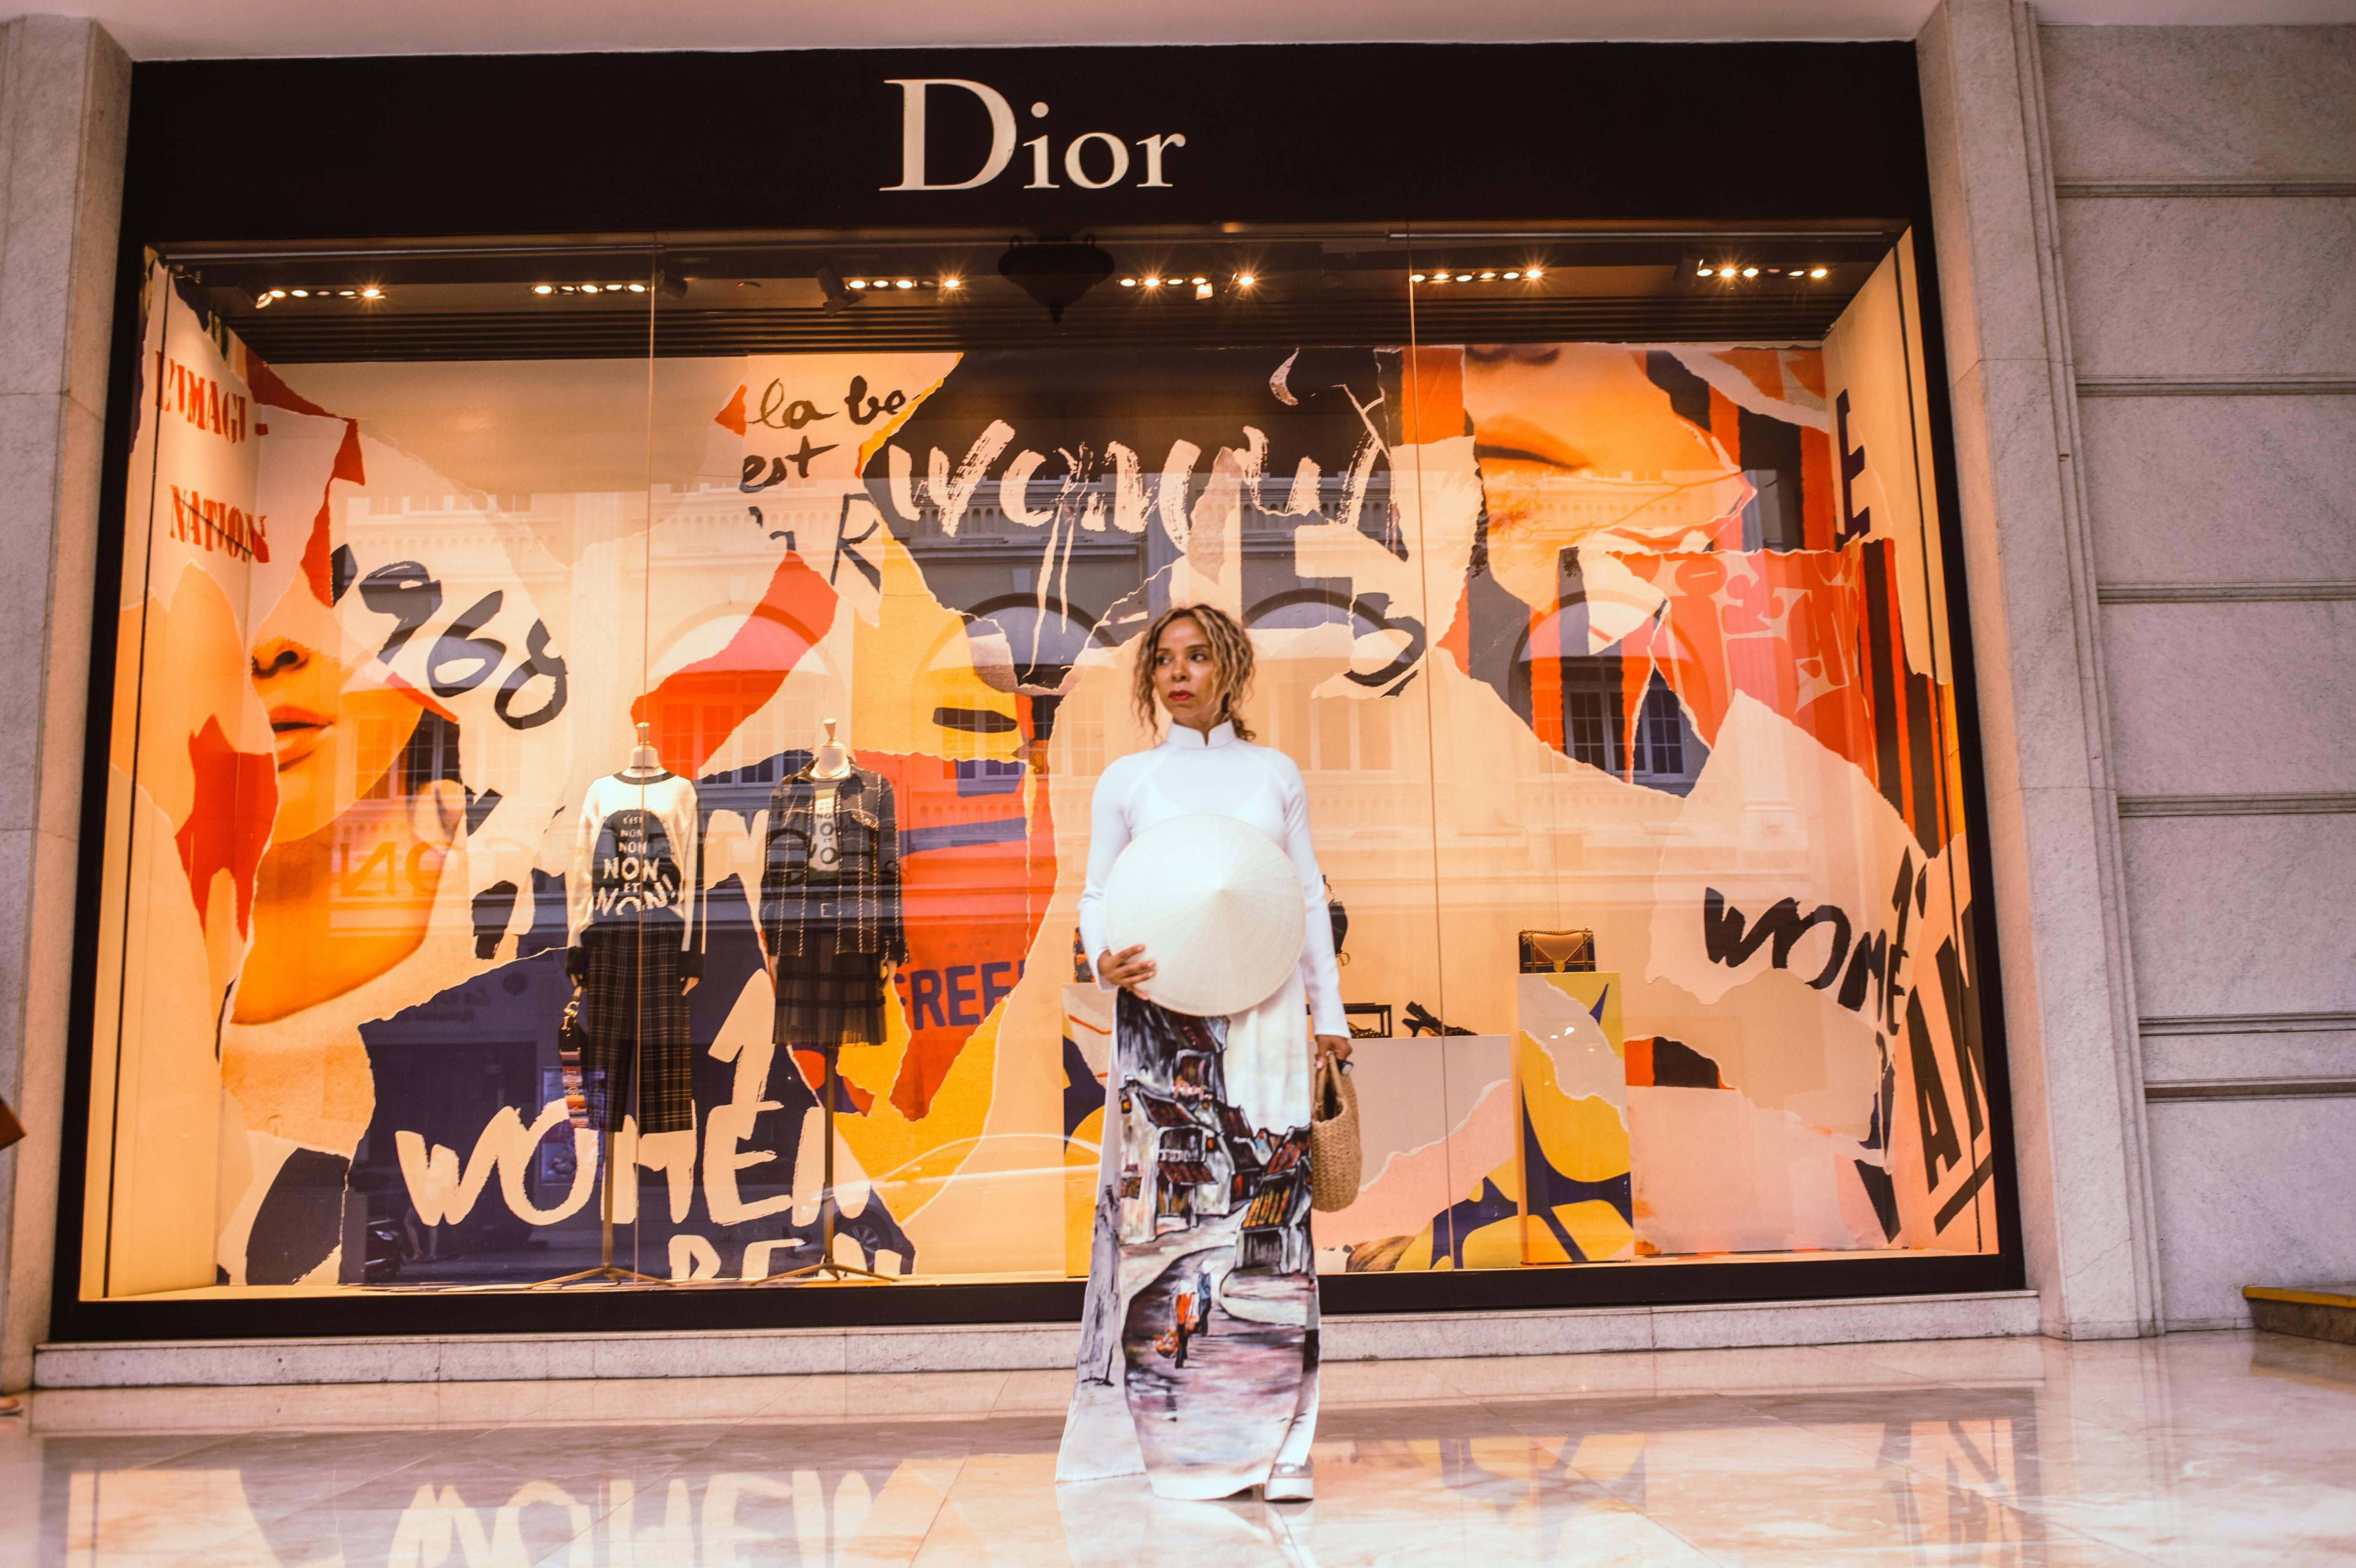 Dior Stock Photos, Royalty Free Dior Images